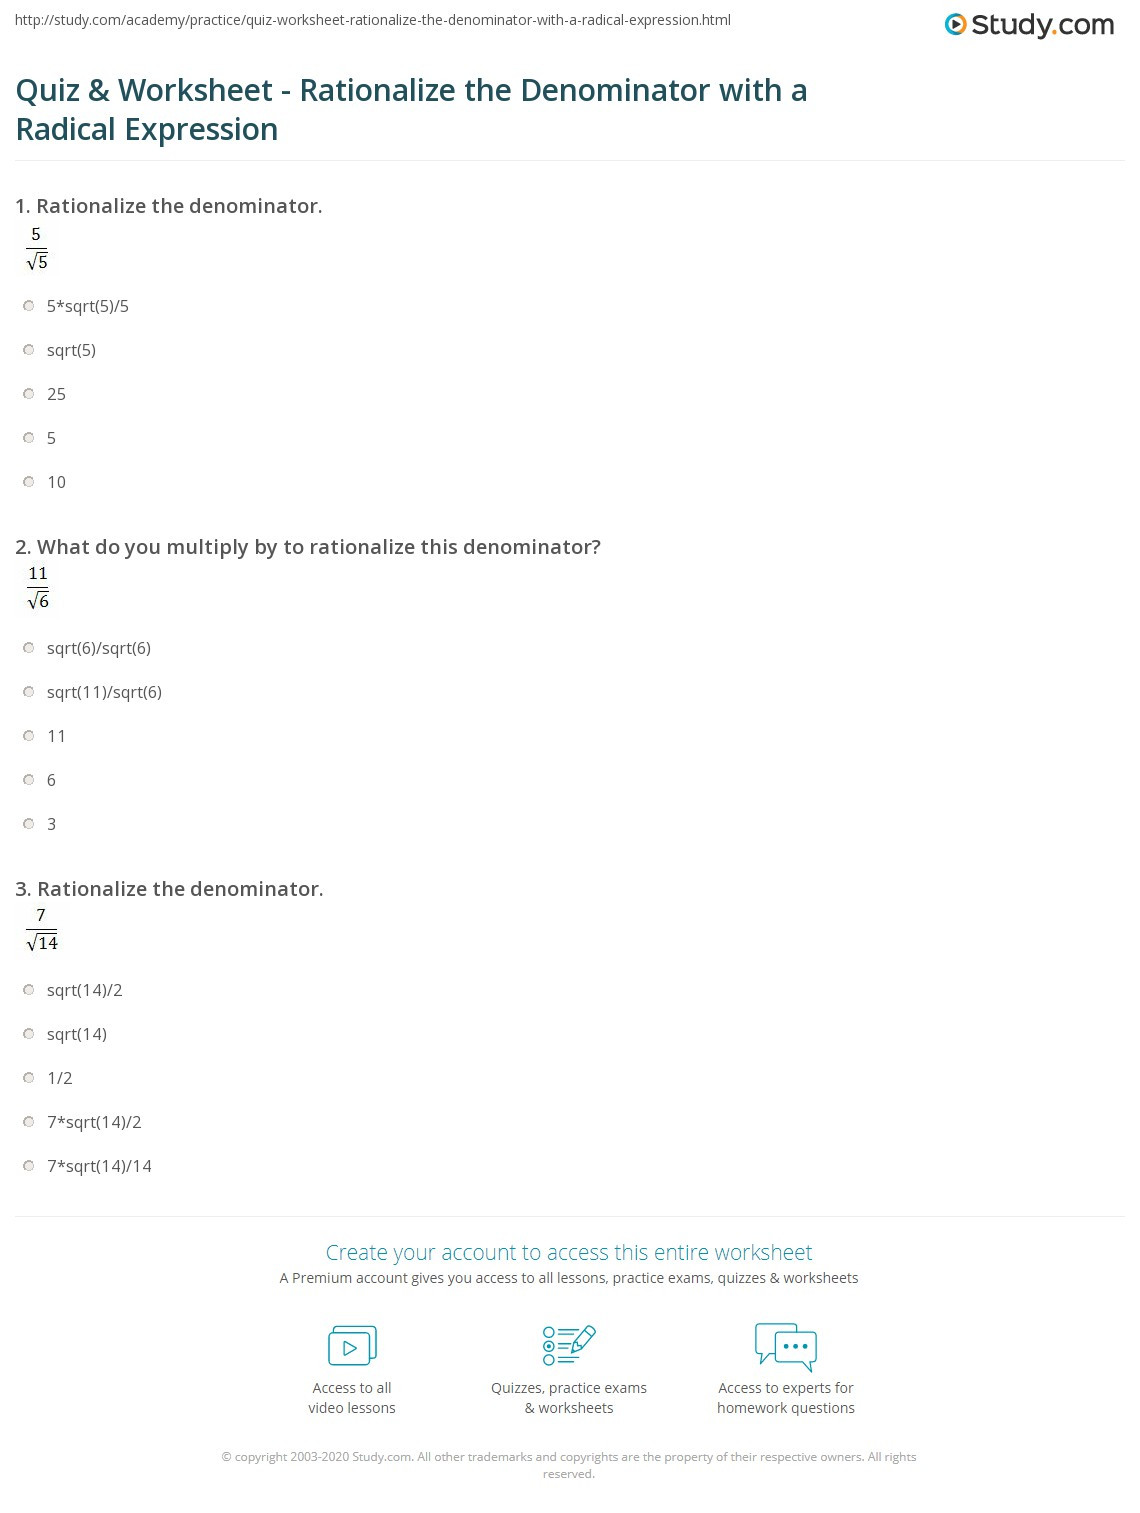 Rationalizing the Denominator Worksheet Quiz &amp; Worksheet Rationalize the Denominator with A